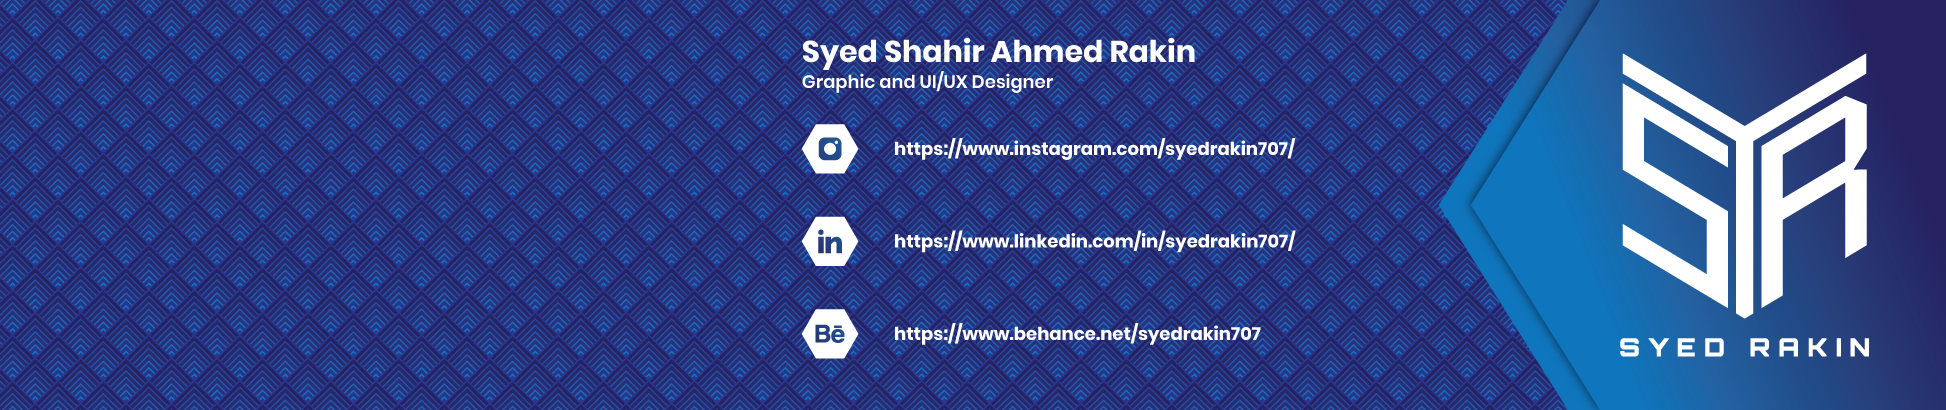 Profil-Banner von Syed Shahir Ahmed Rakin